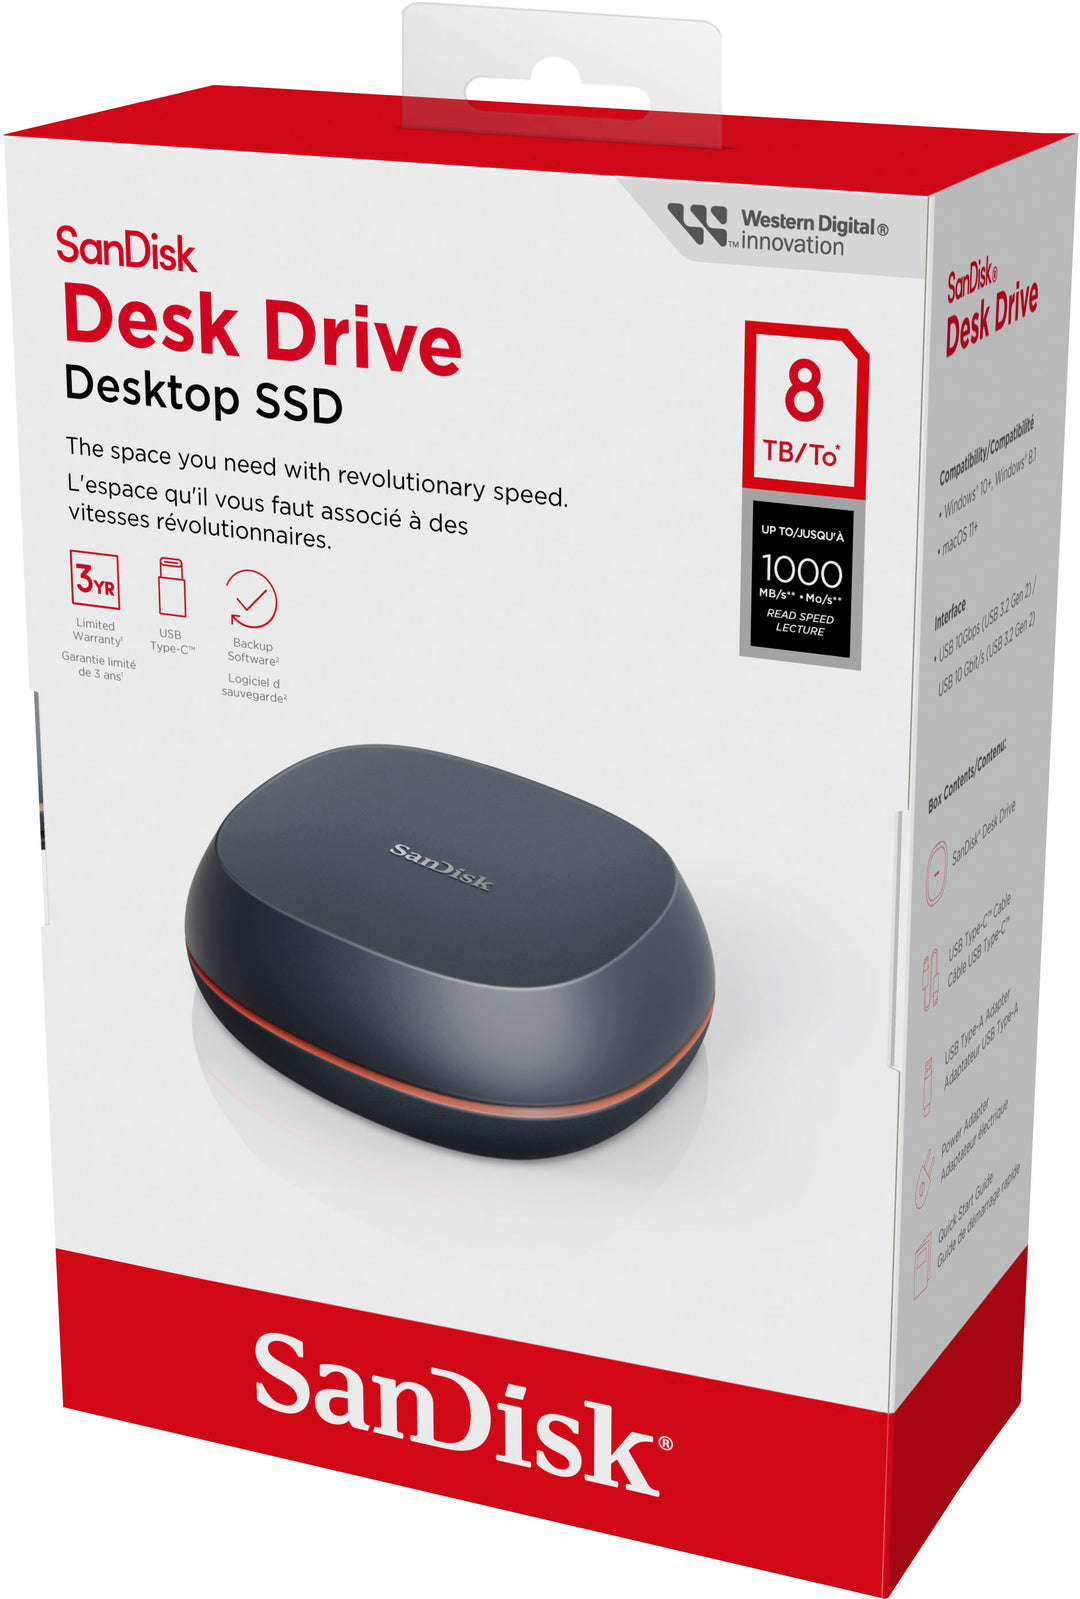 SanDisk - 8TB  Desk Drive  USB Type-C Desktop External SSD - Black_8